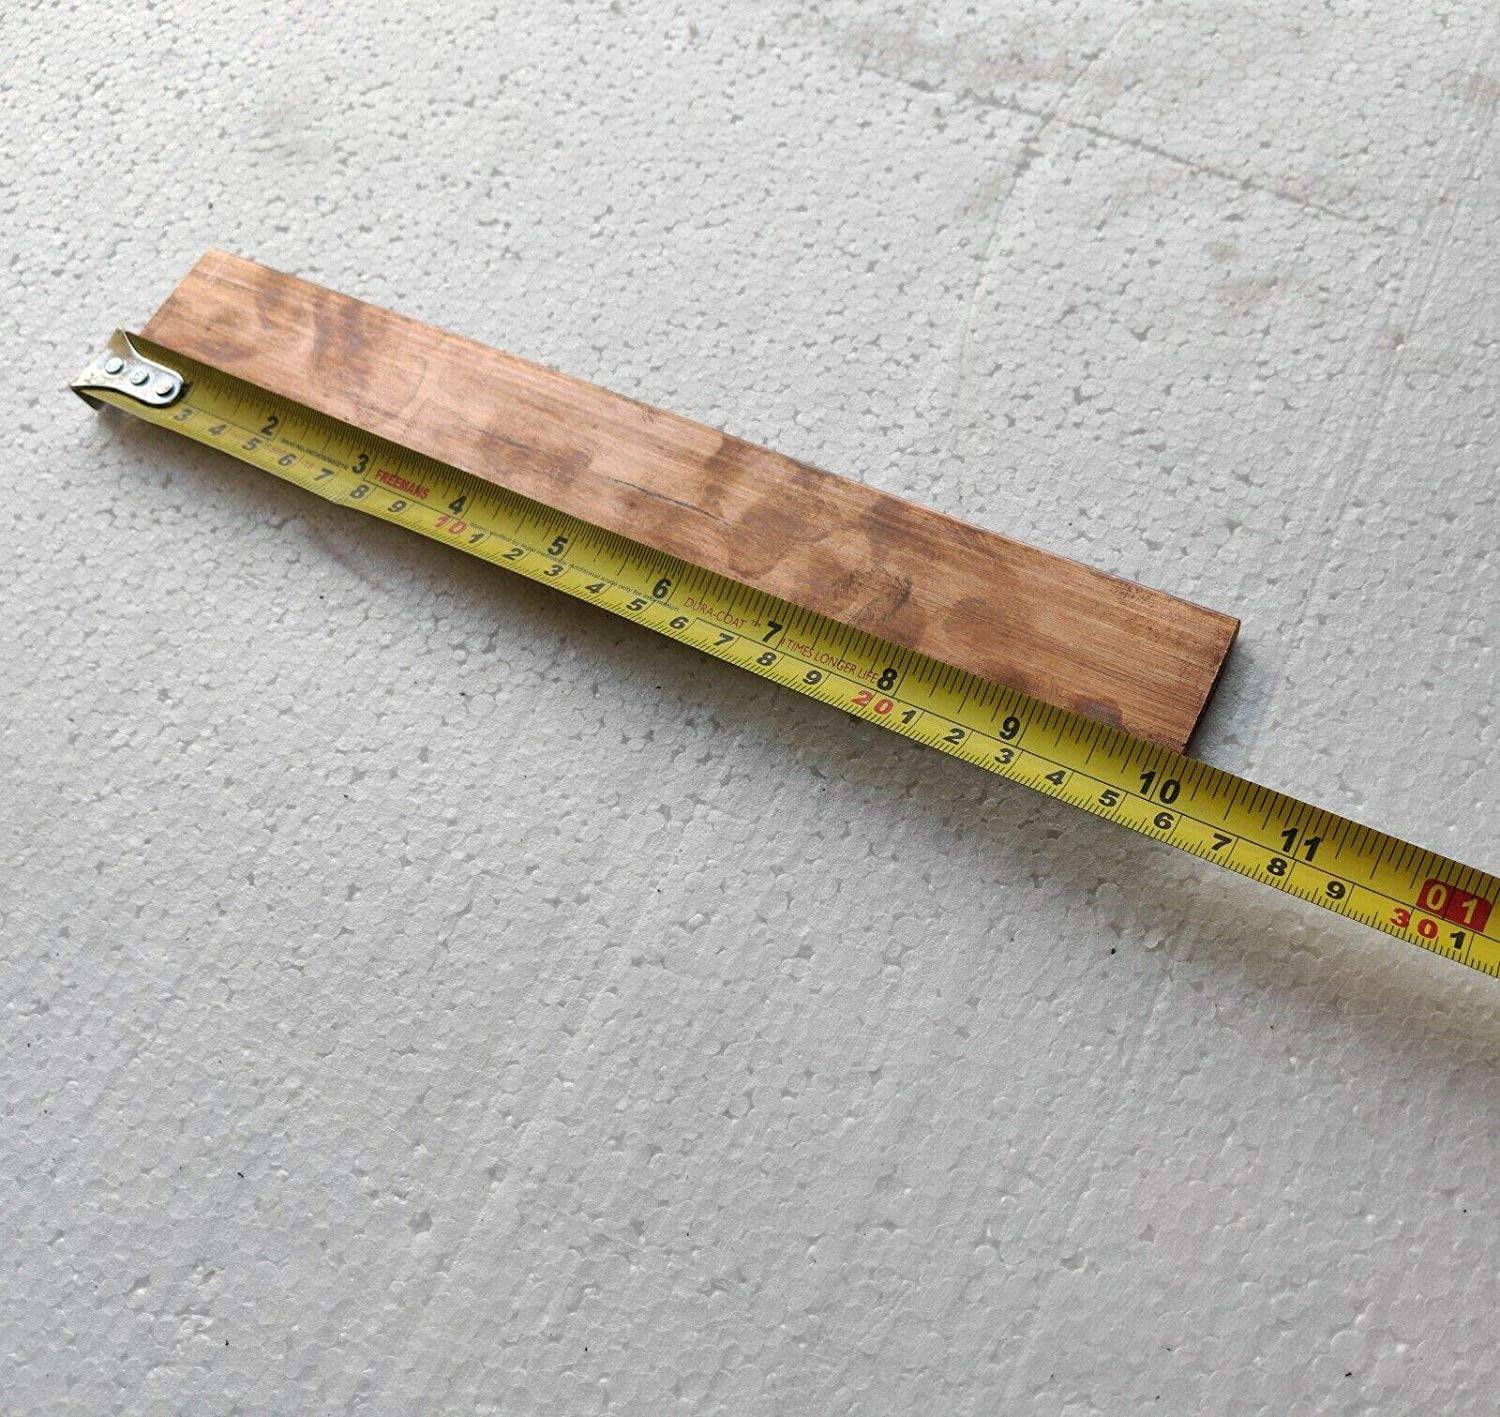 2 x 1/4"x 1-1/2" COPPER BAR 10" long Solid Flat Bar .25" Mill Bar 0.25” x 1.5”